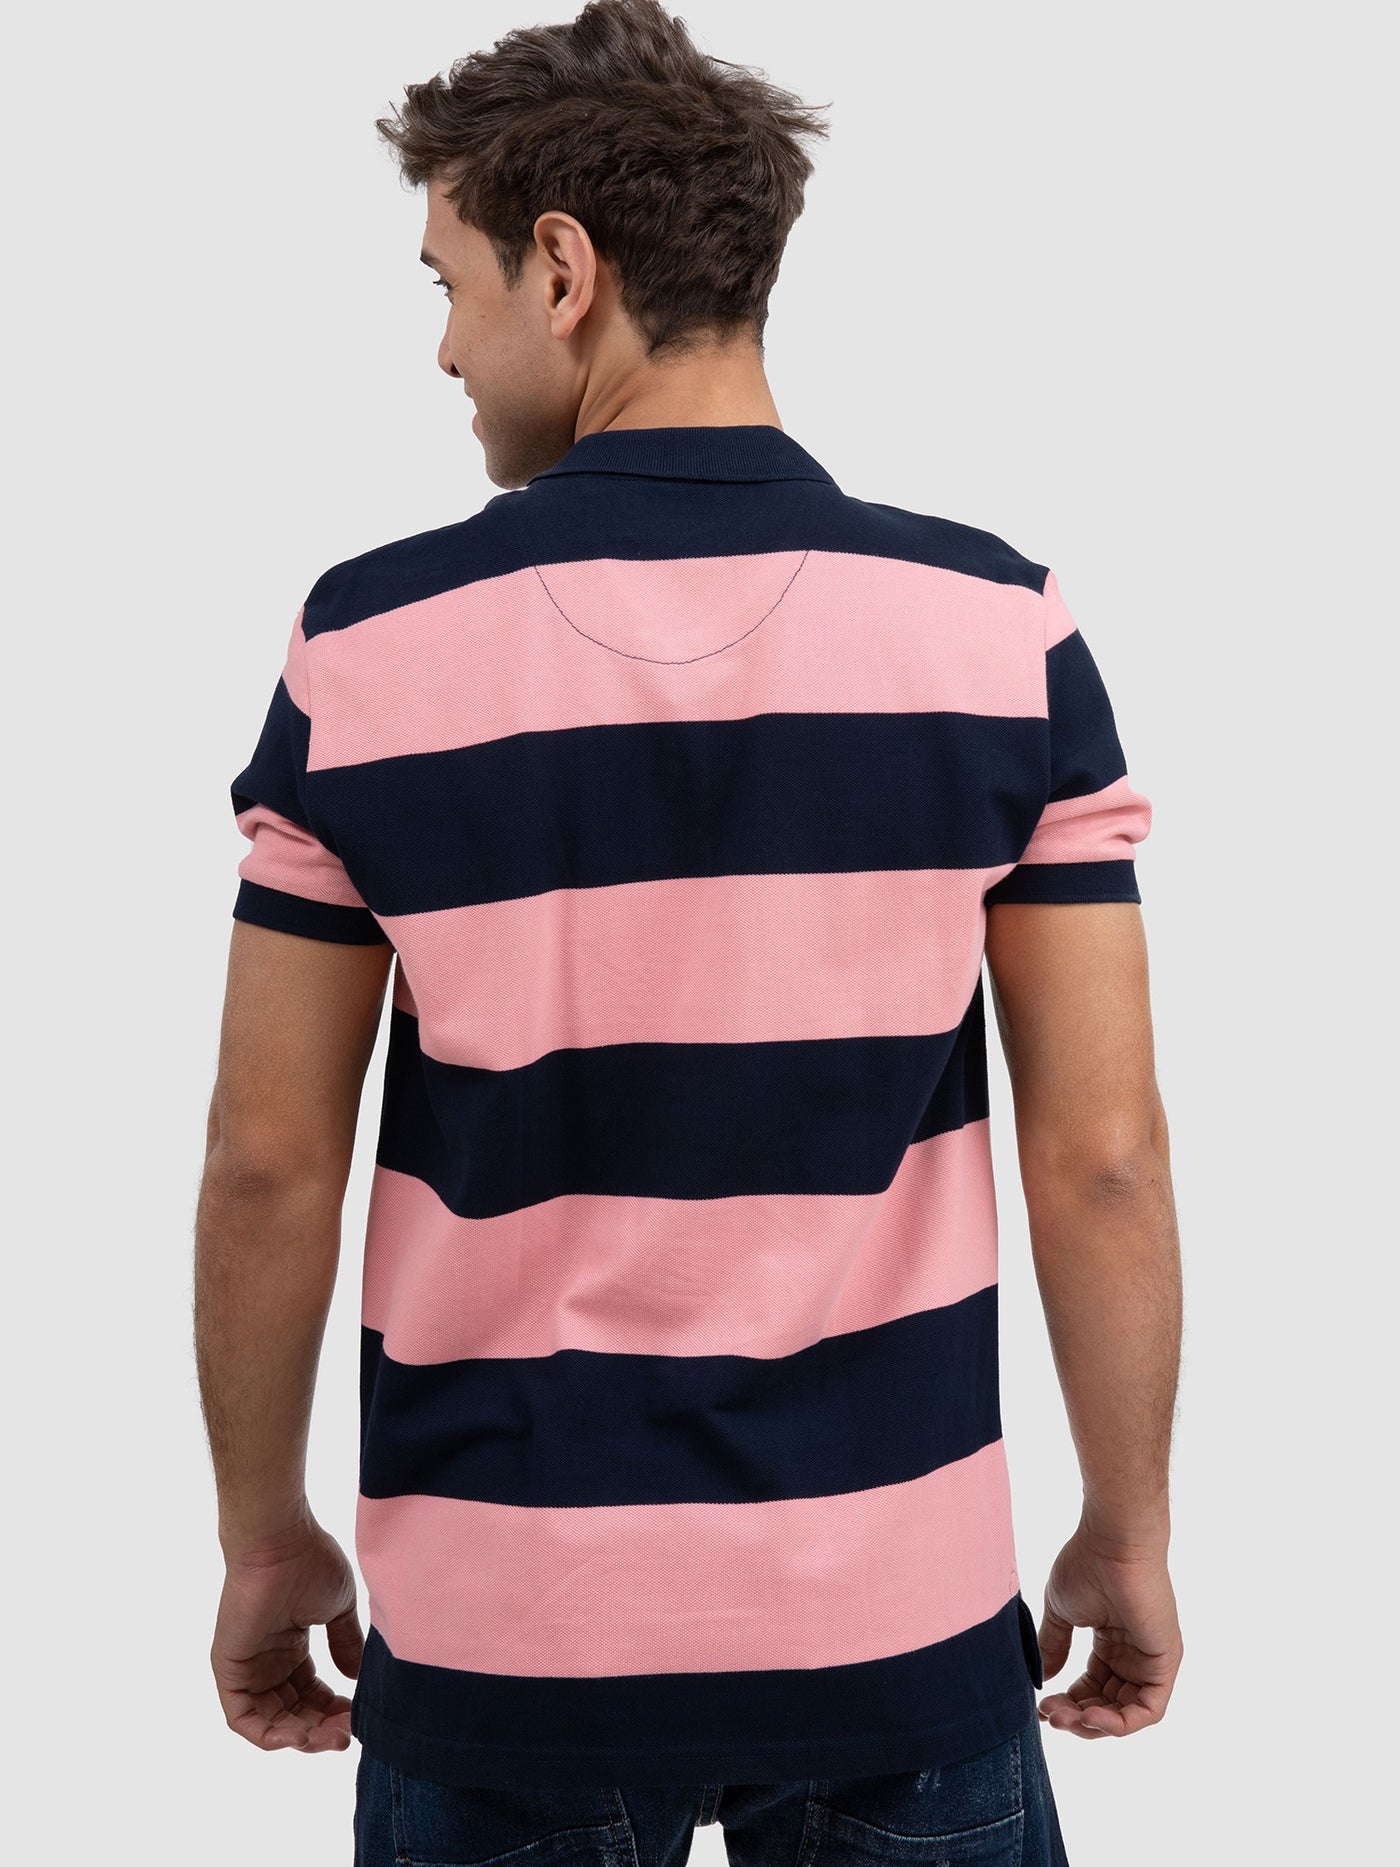 Premoda Mens Wide Horizontal Striped Polo Shirt